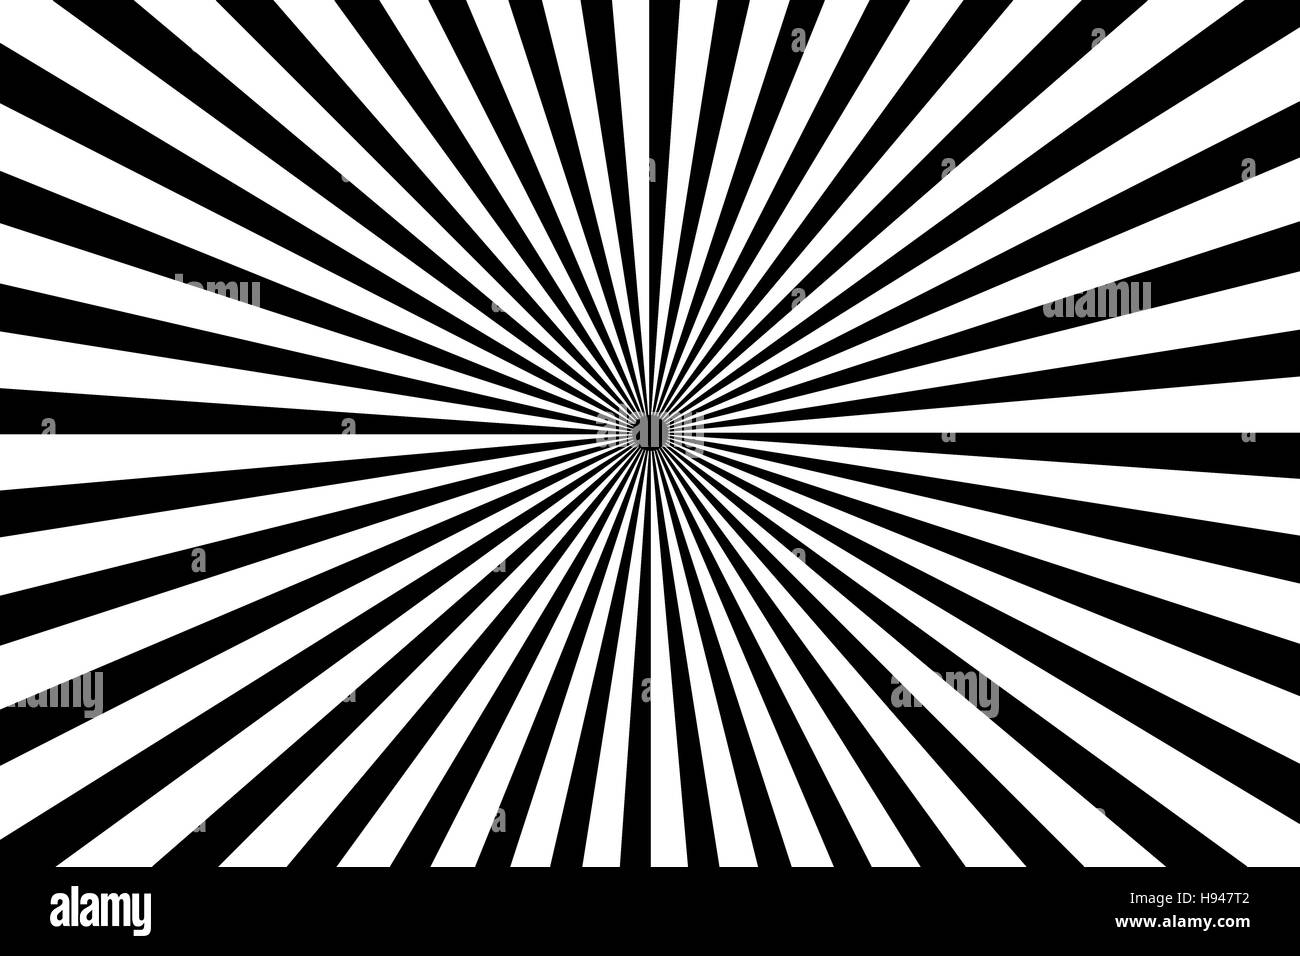 Radiating black and white line background Stock Photo